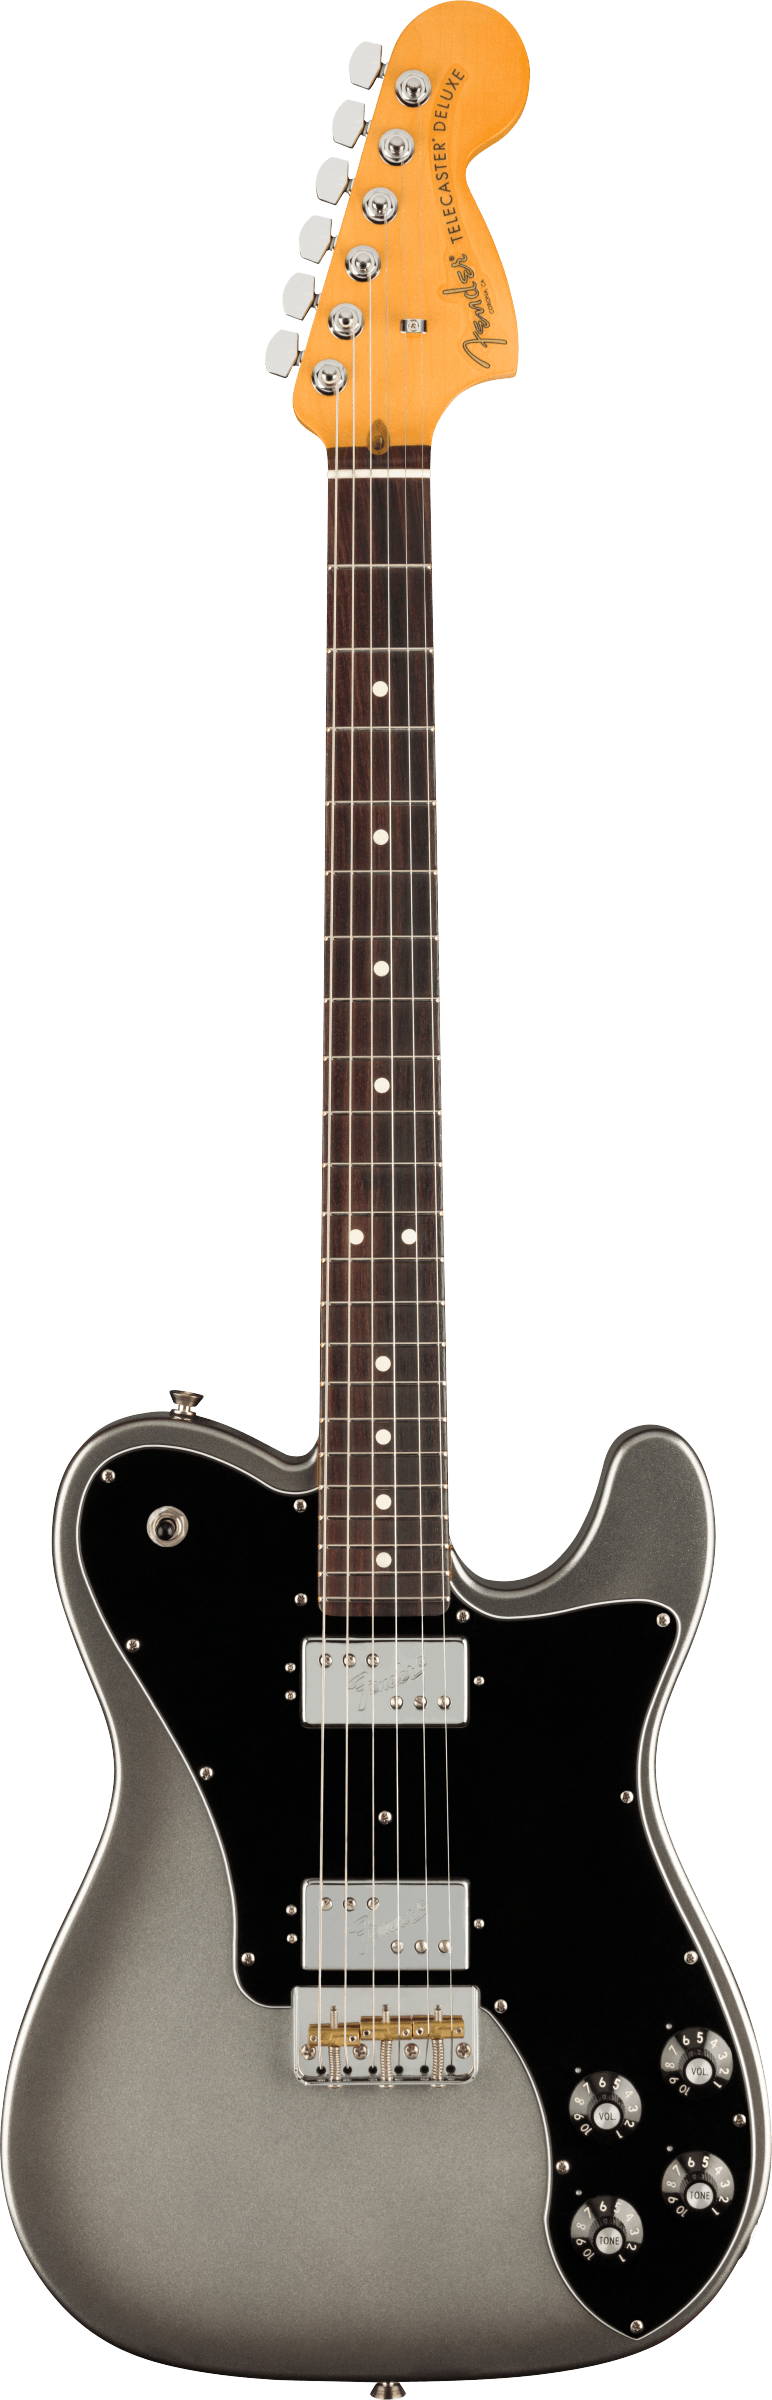 Fender Telecaster electric guitar in Mercury Tone Shop Guitars Dallas Fort Worth